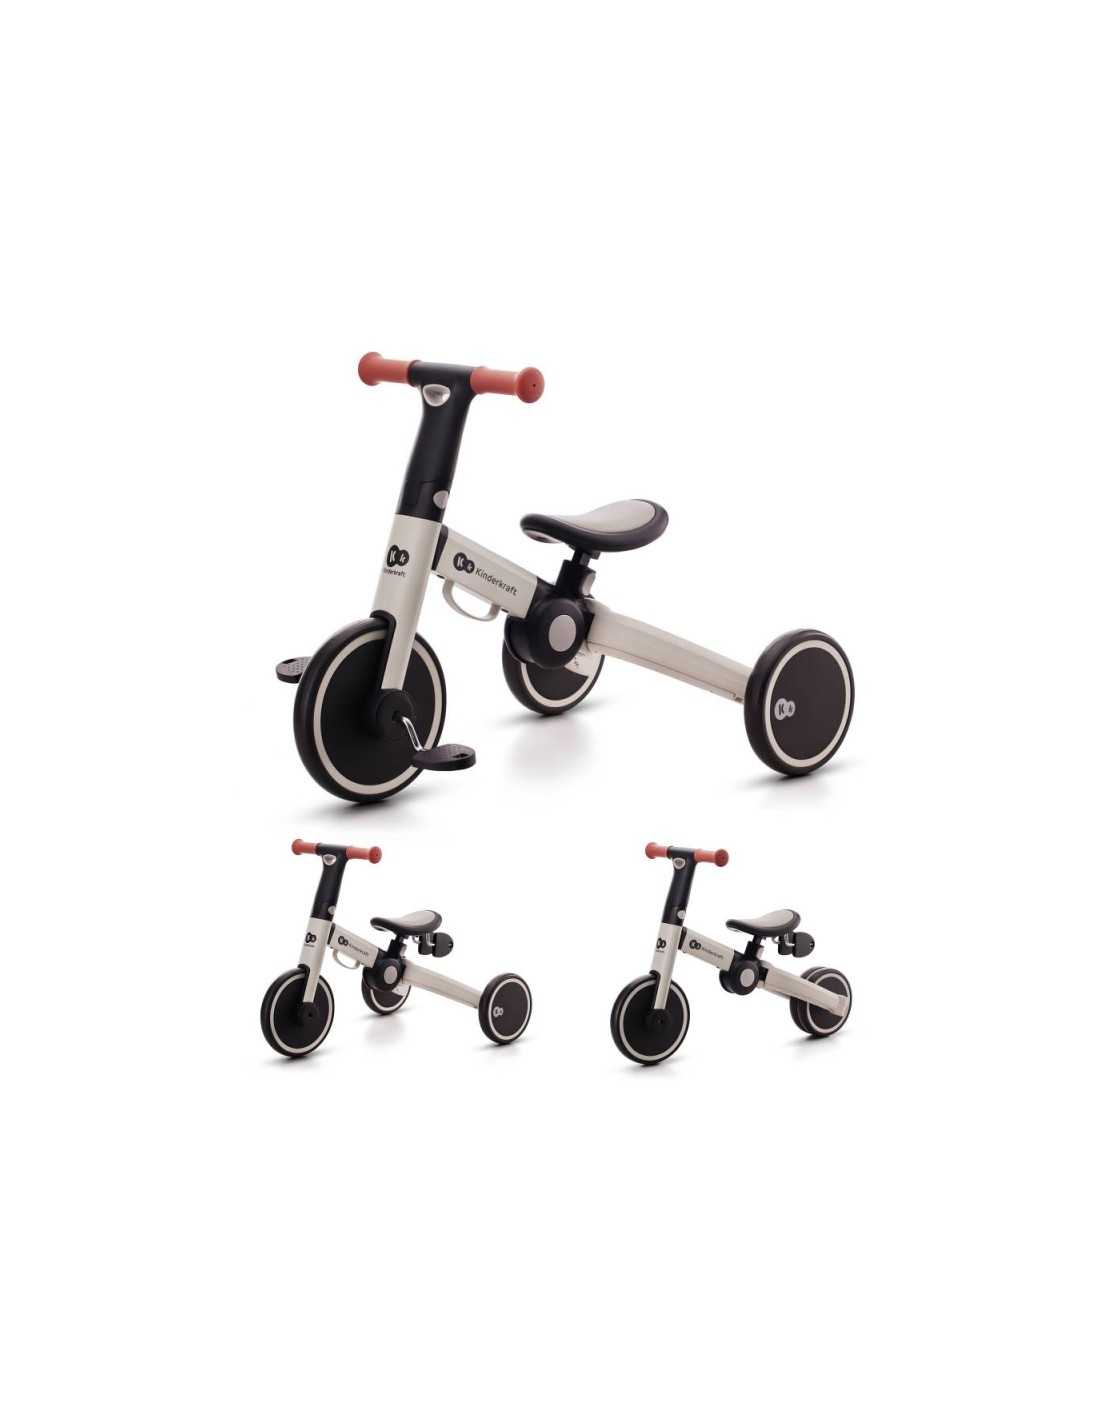 Review] Best Affordable & Sturdy Trike - Kinderkraft